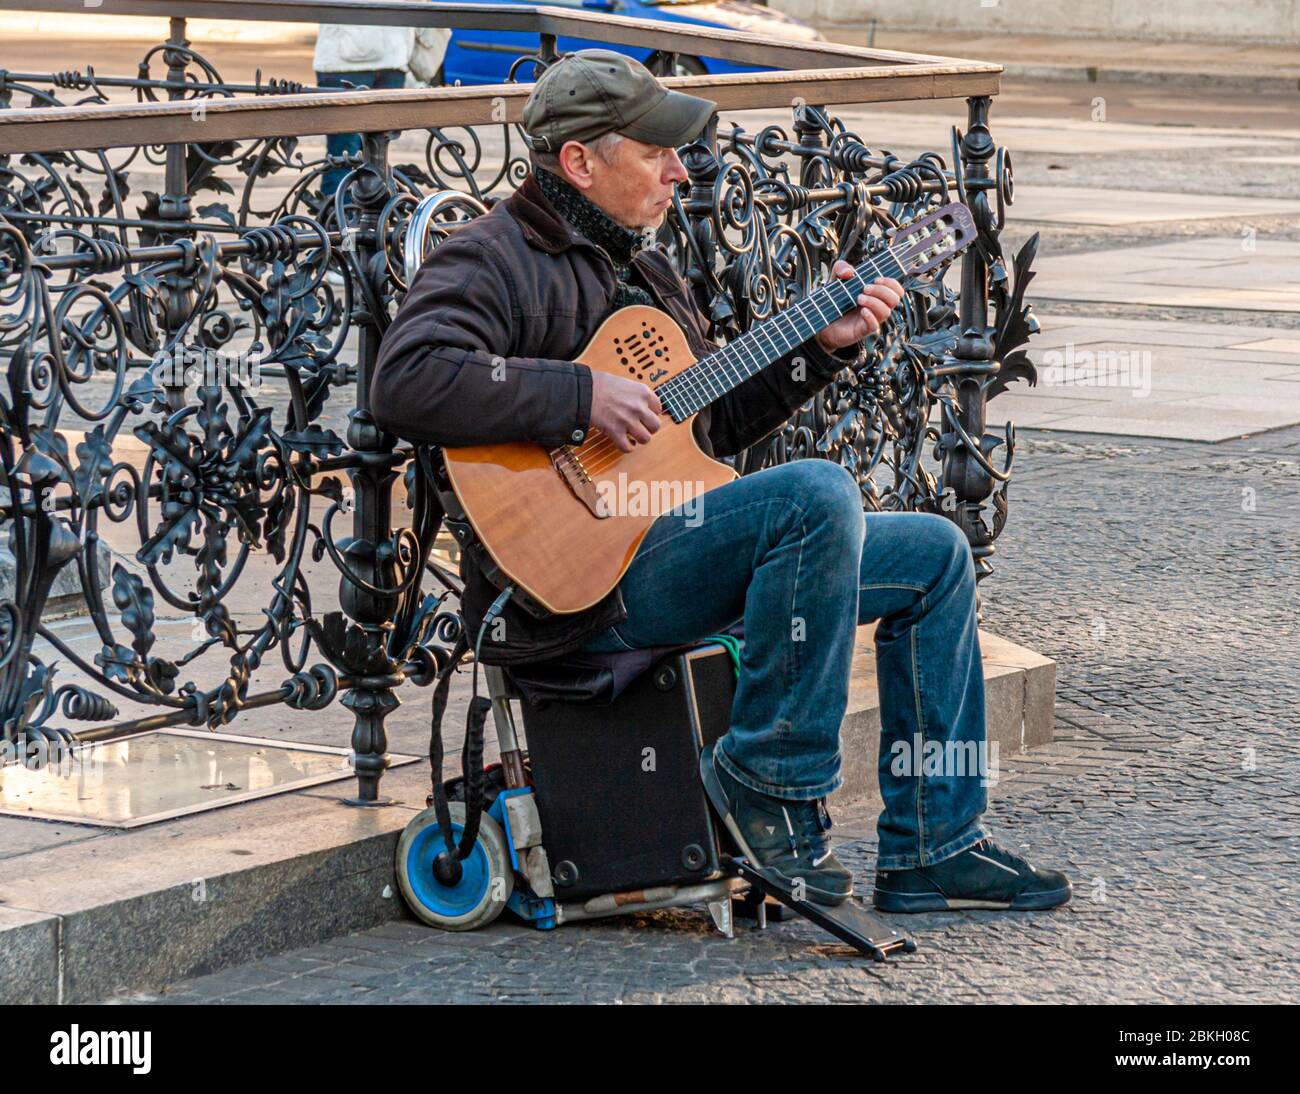 Guitar Street Performer on a Godin Model in Berlin, Germany Stock Photo -  Alamy